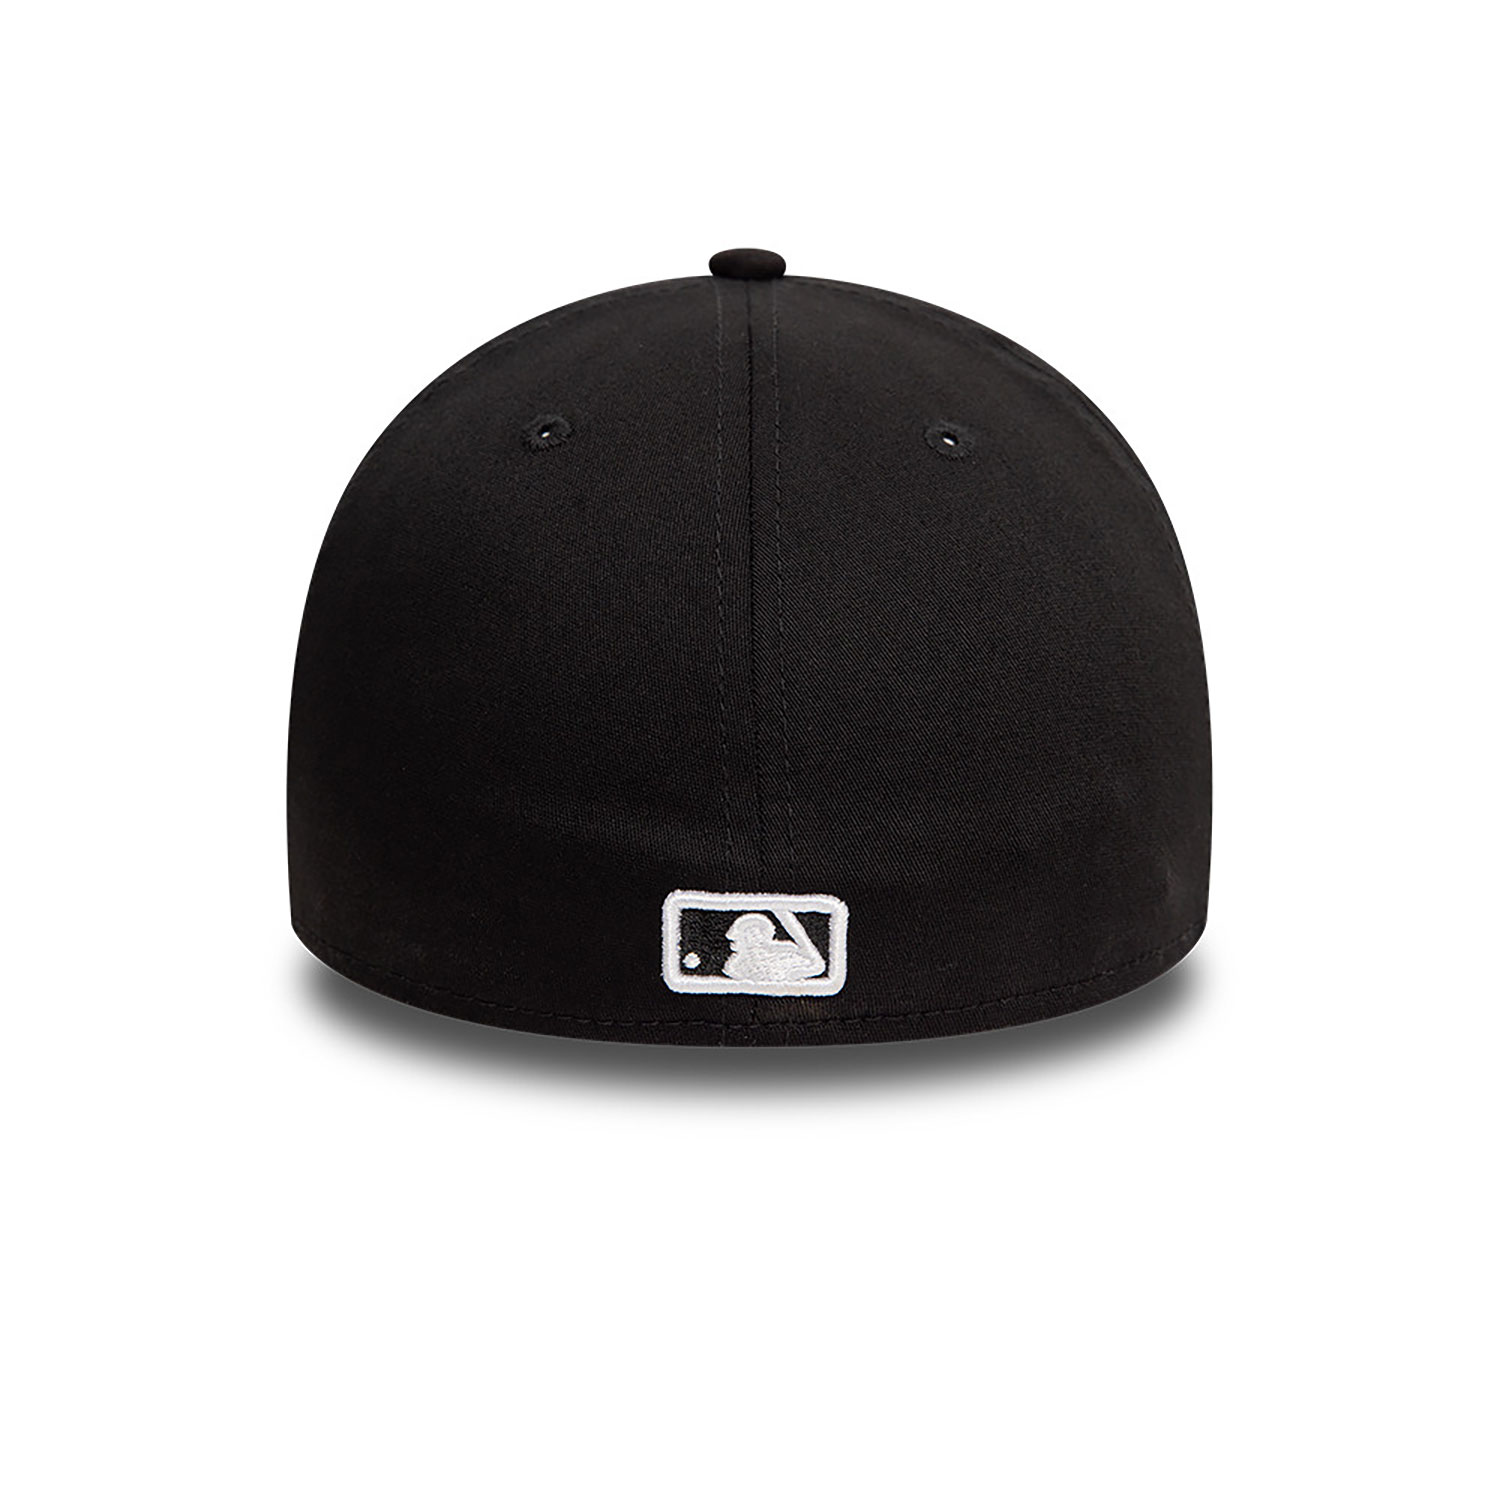 New York Yankees League Essential Black 39THIRTY A-Frame Stretch Fit Cap